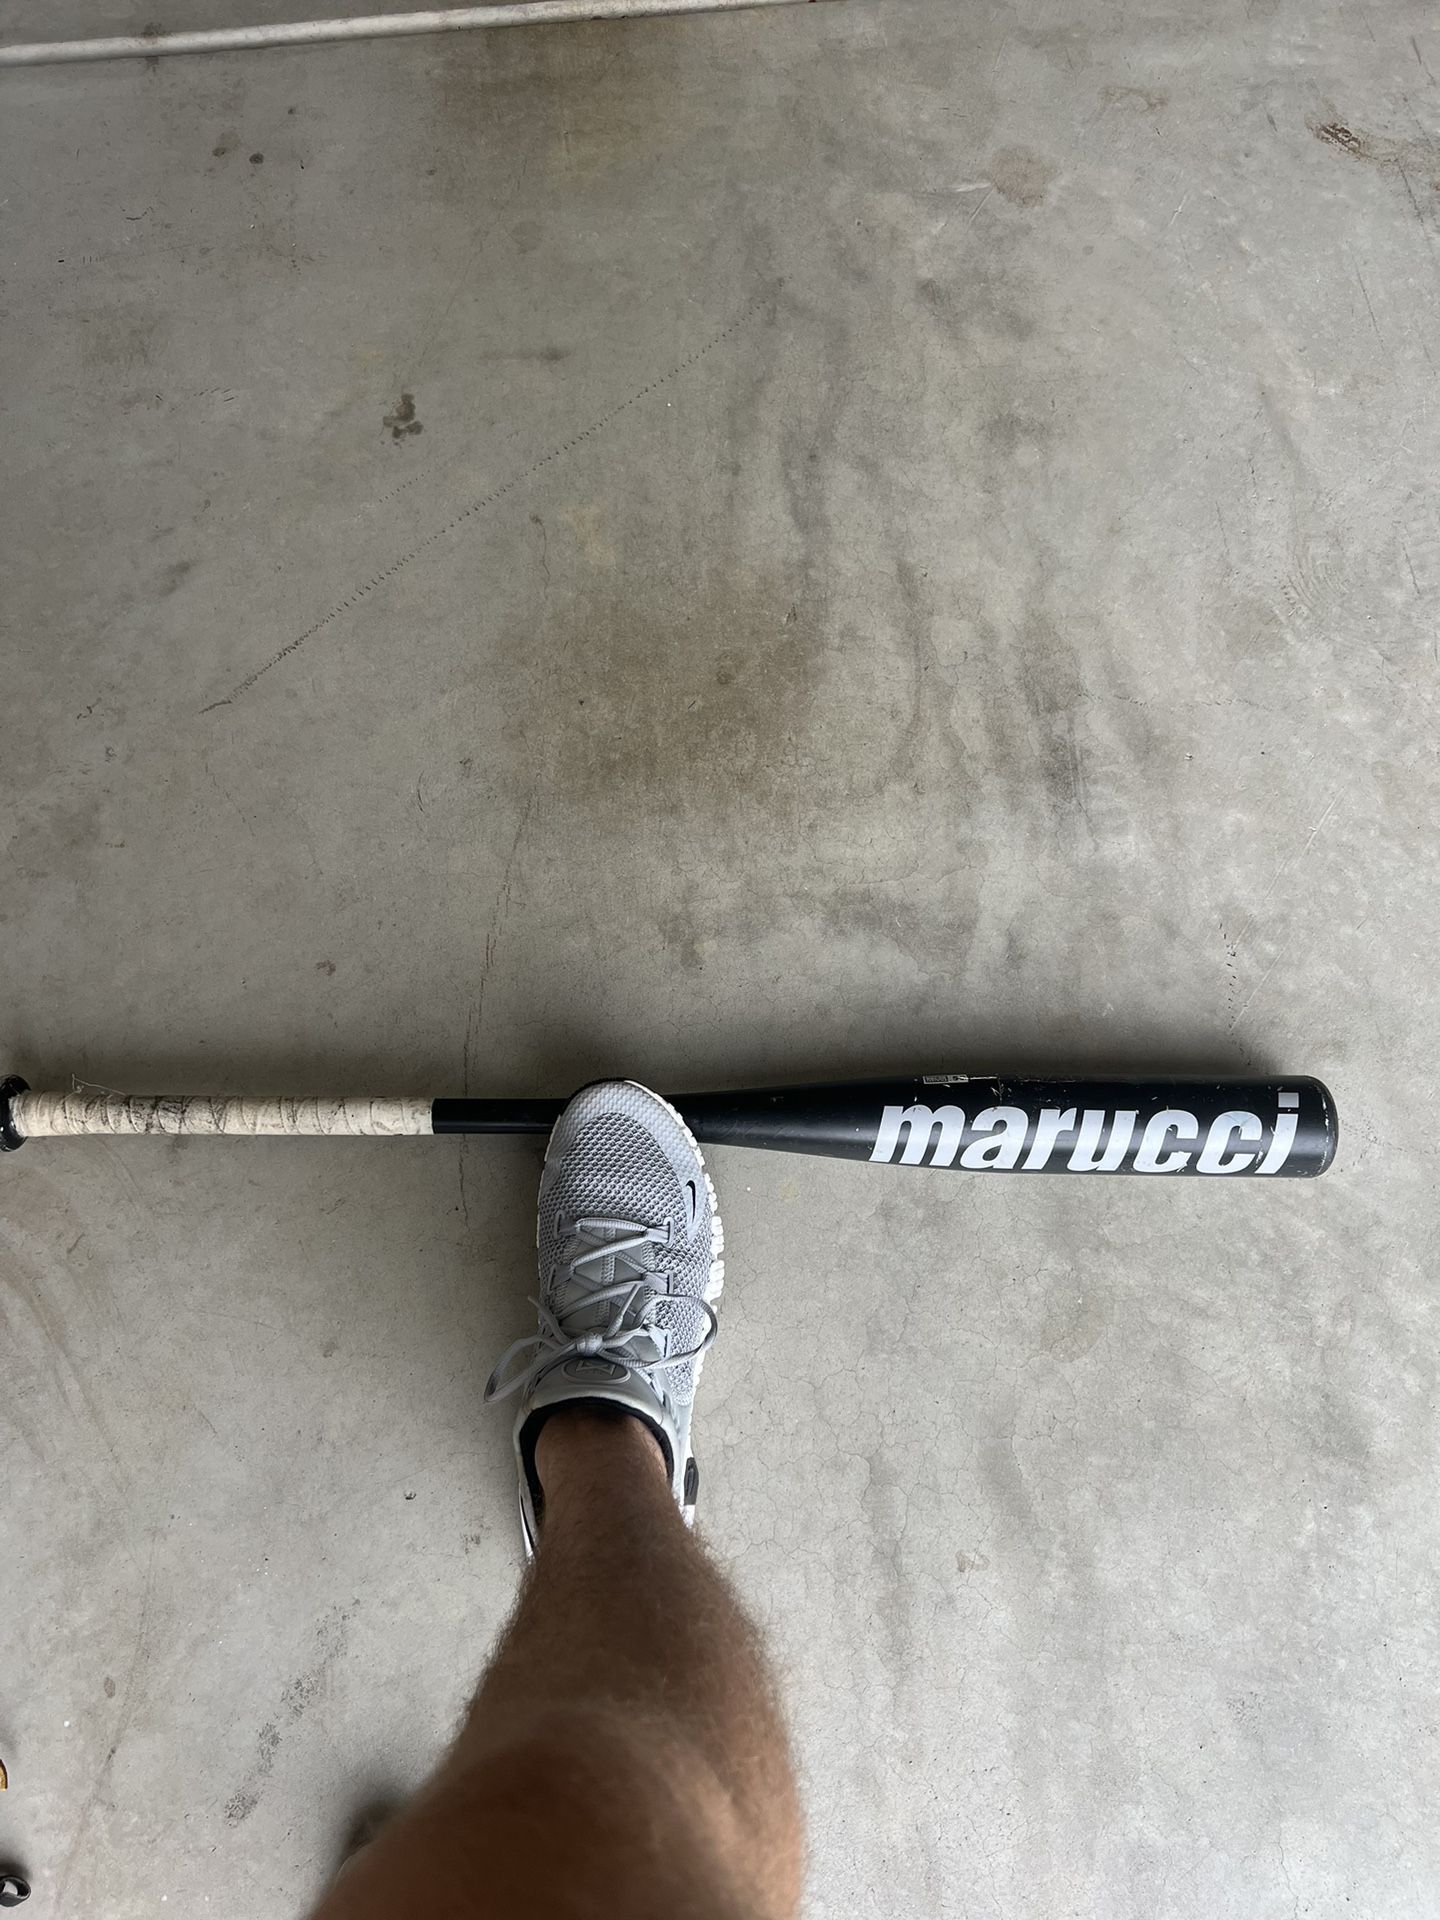 Marucci Black 2 Baseball bat (Bbcor certified)